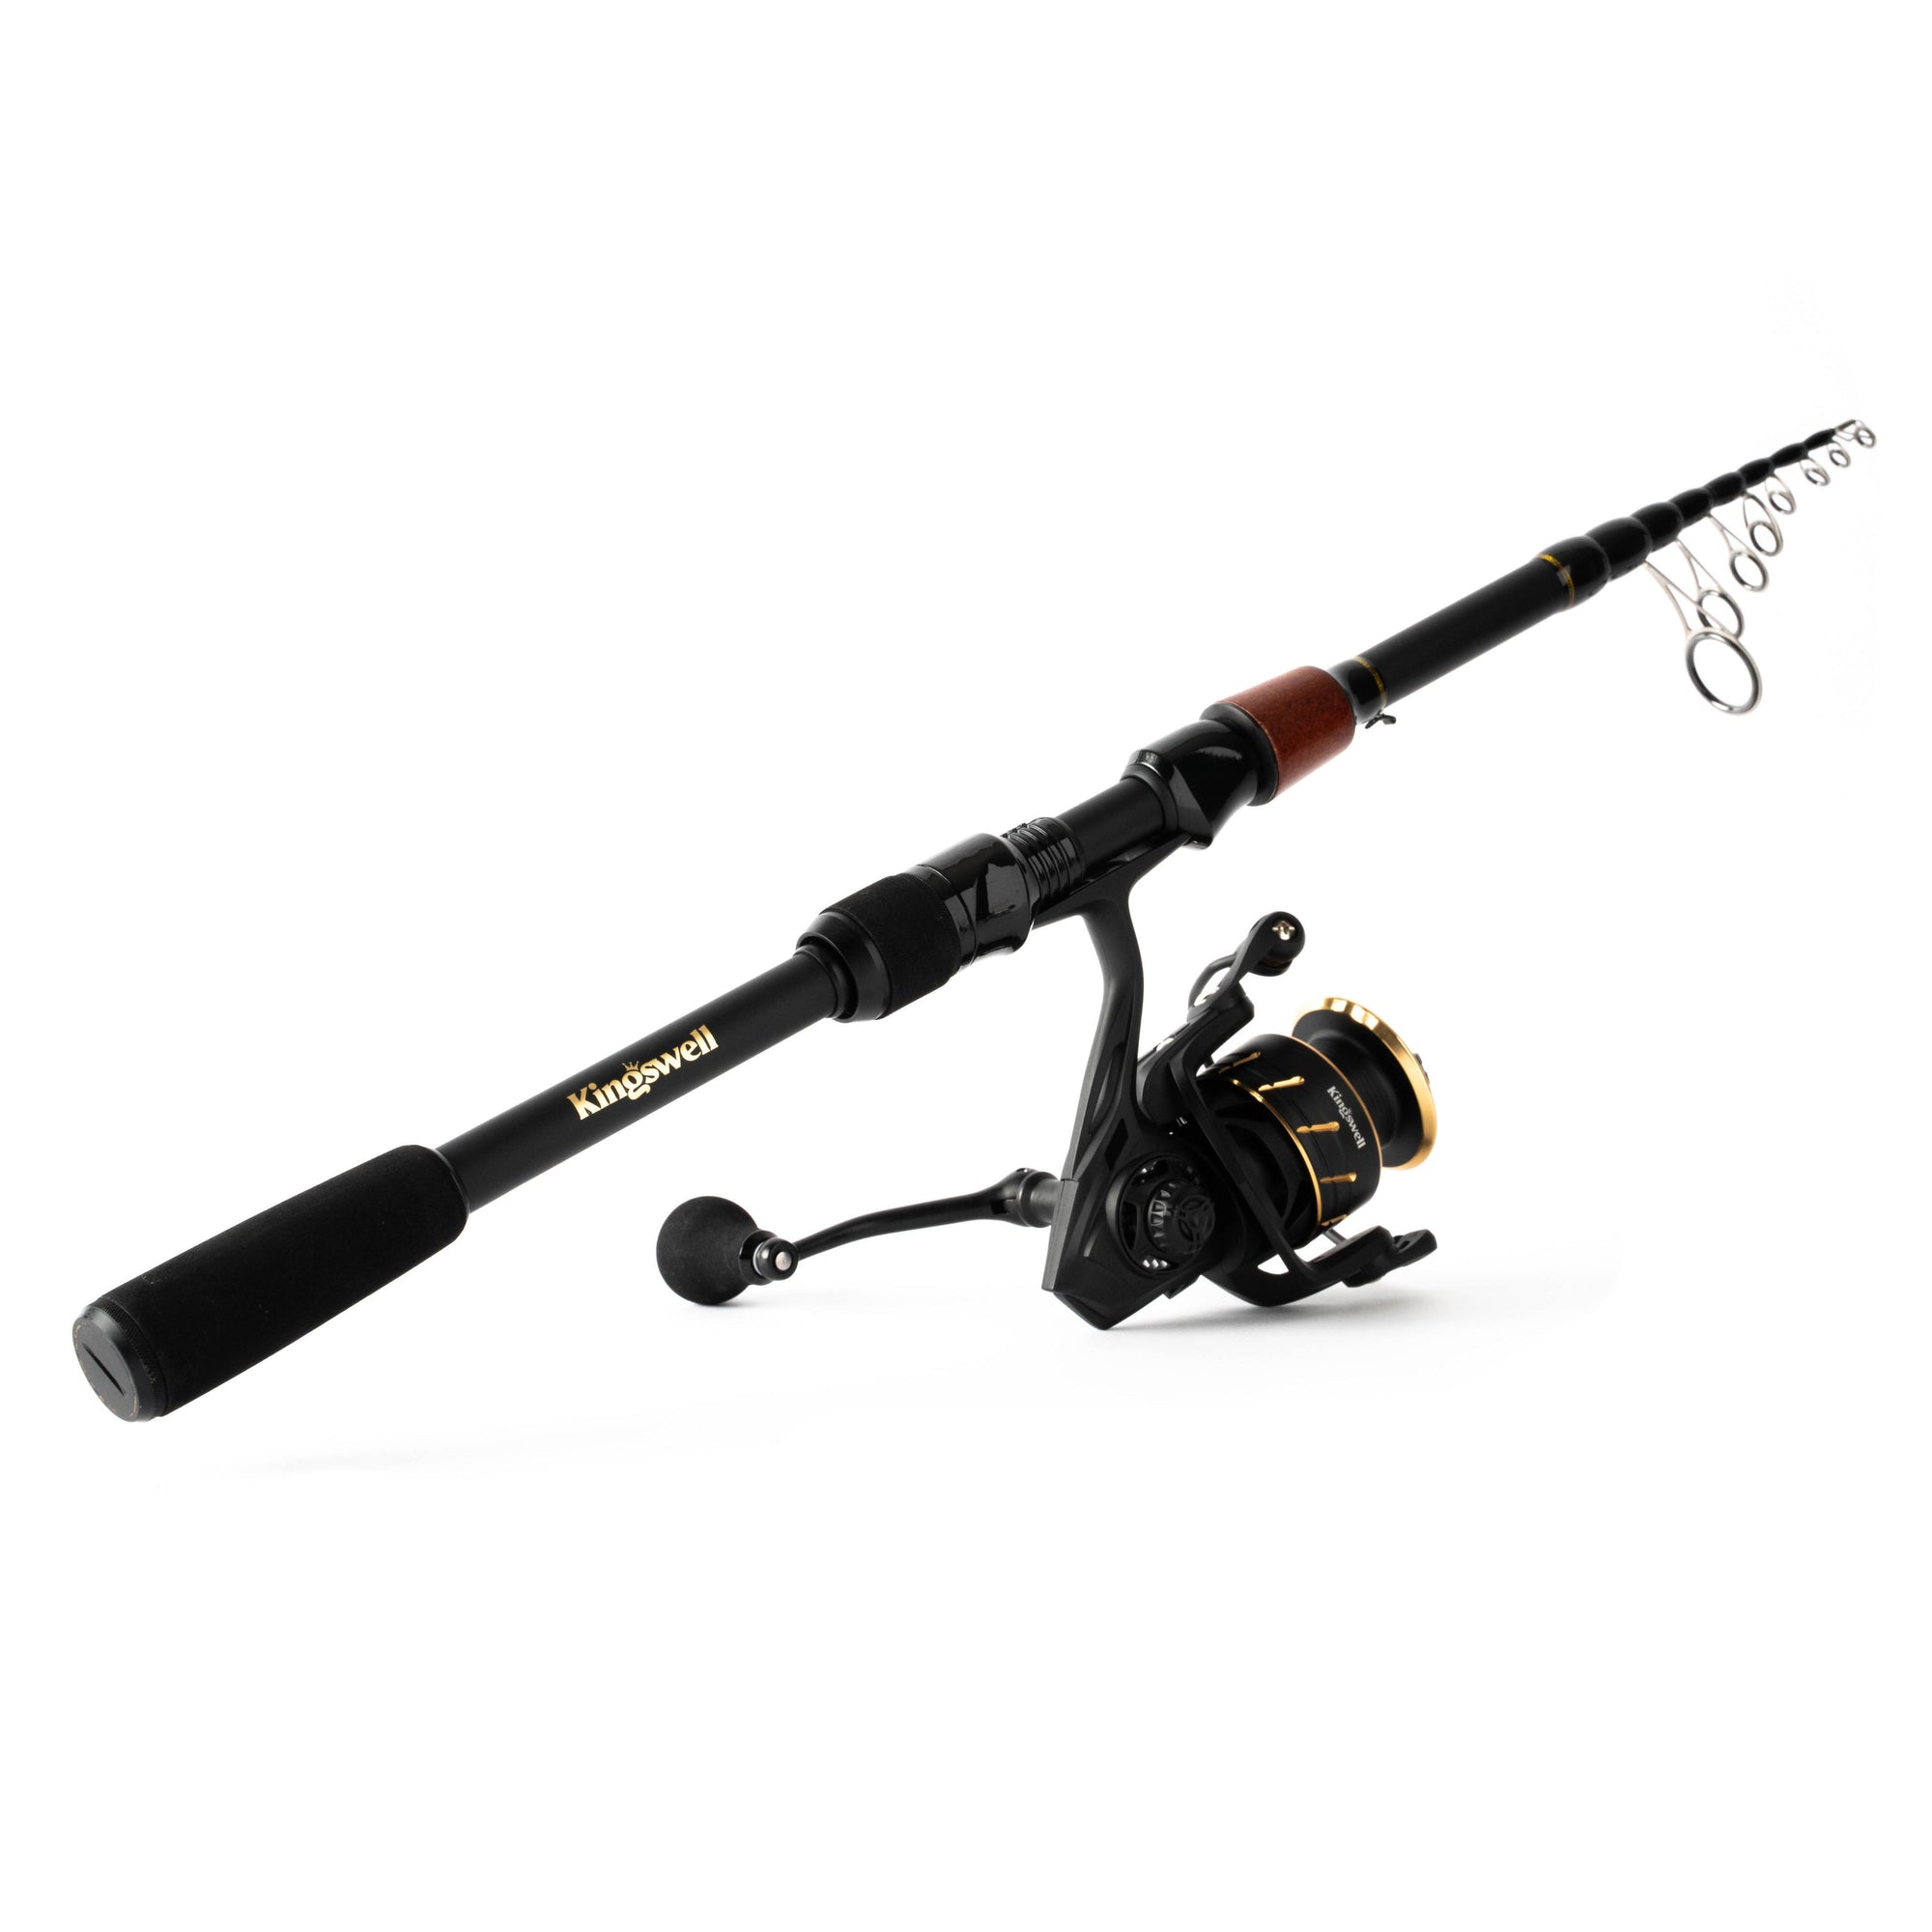 KINGSWELL Telescopic Fishing Rod and Reel Combo, Premium Graphite